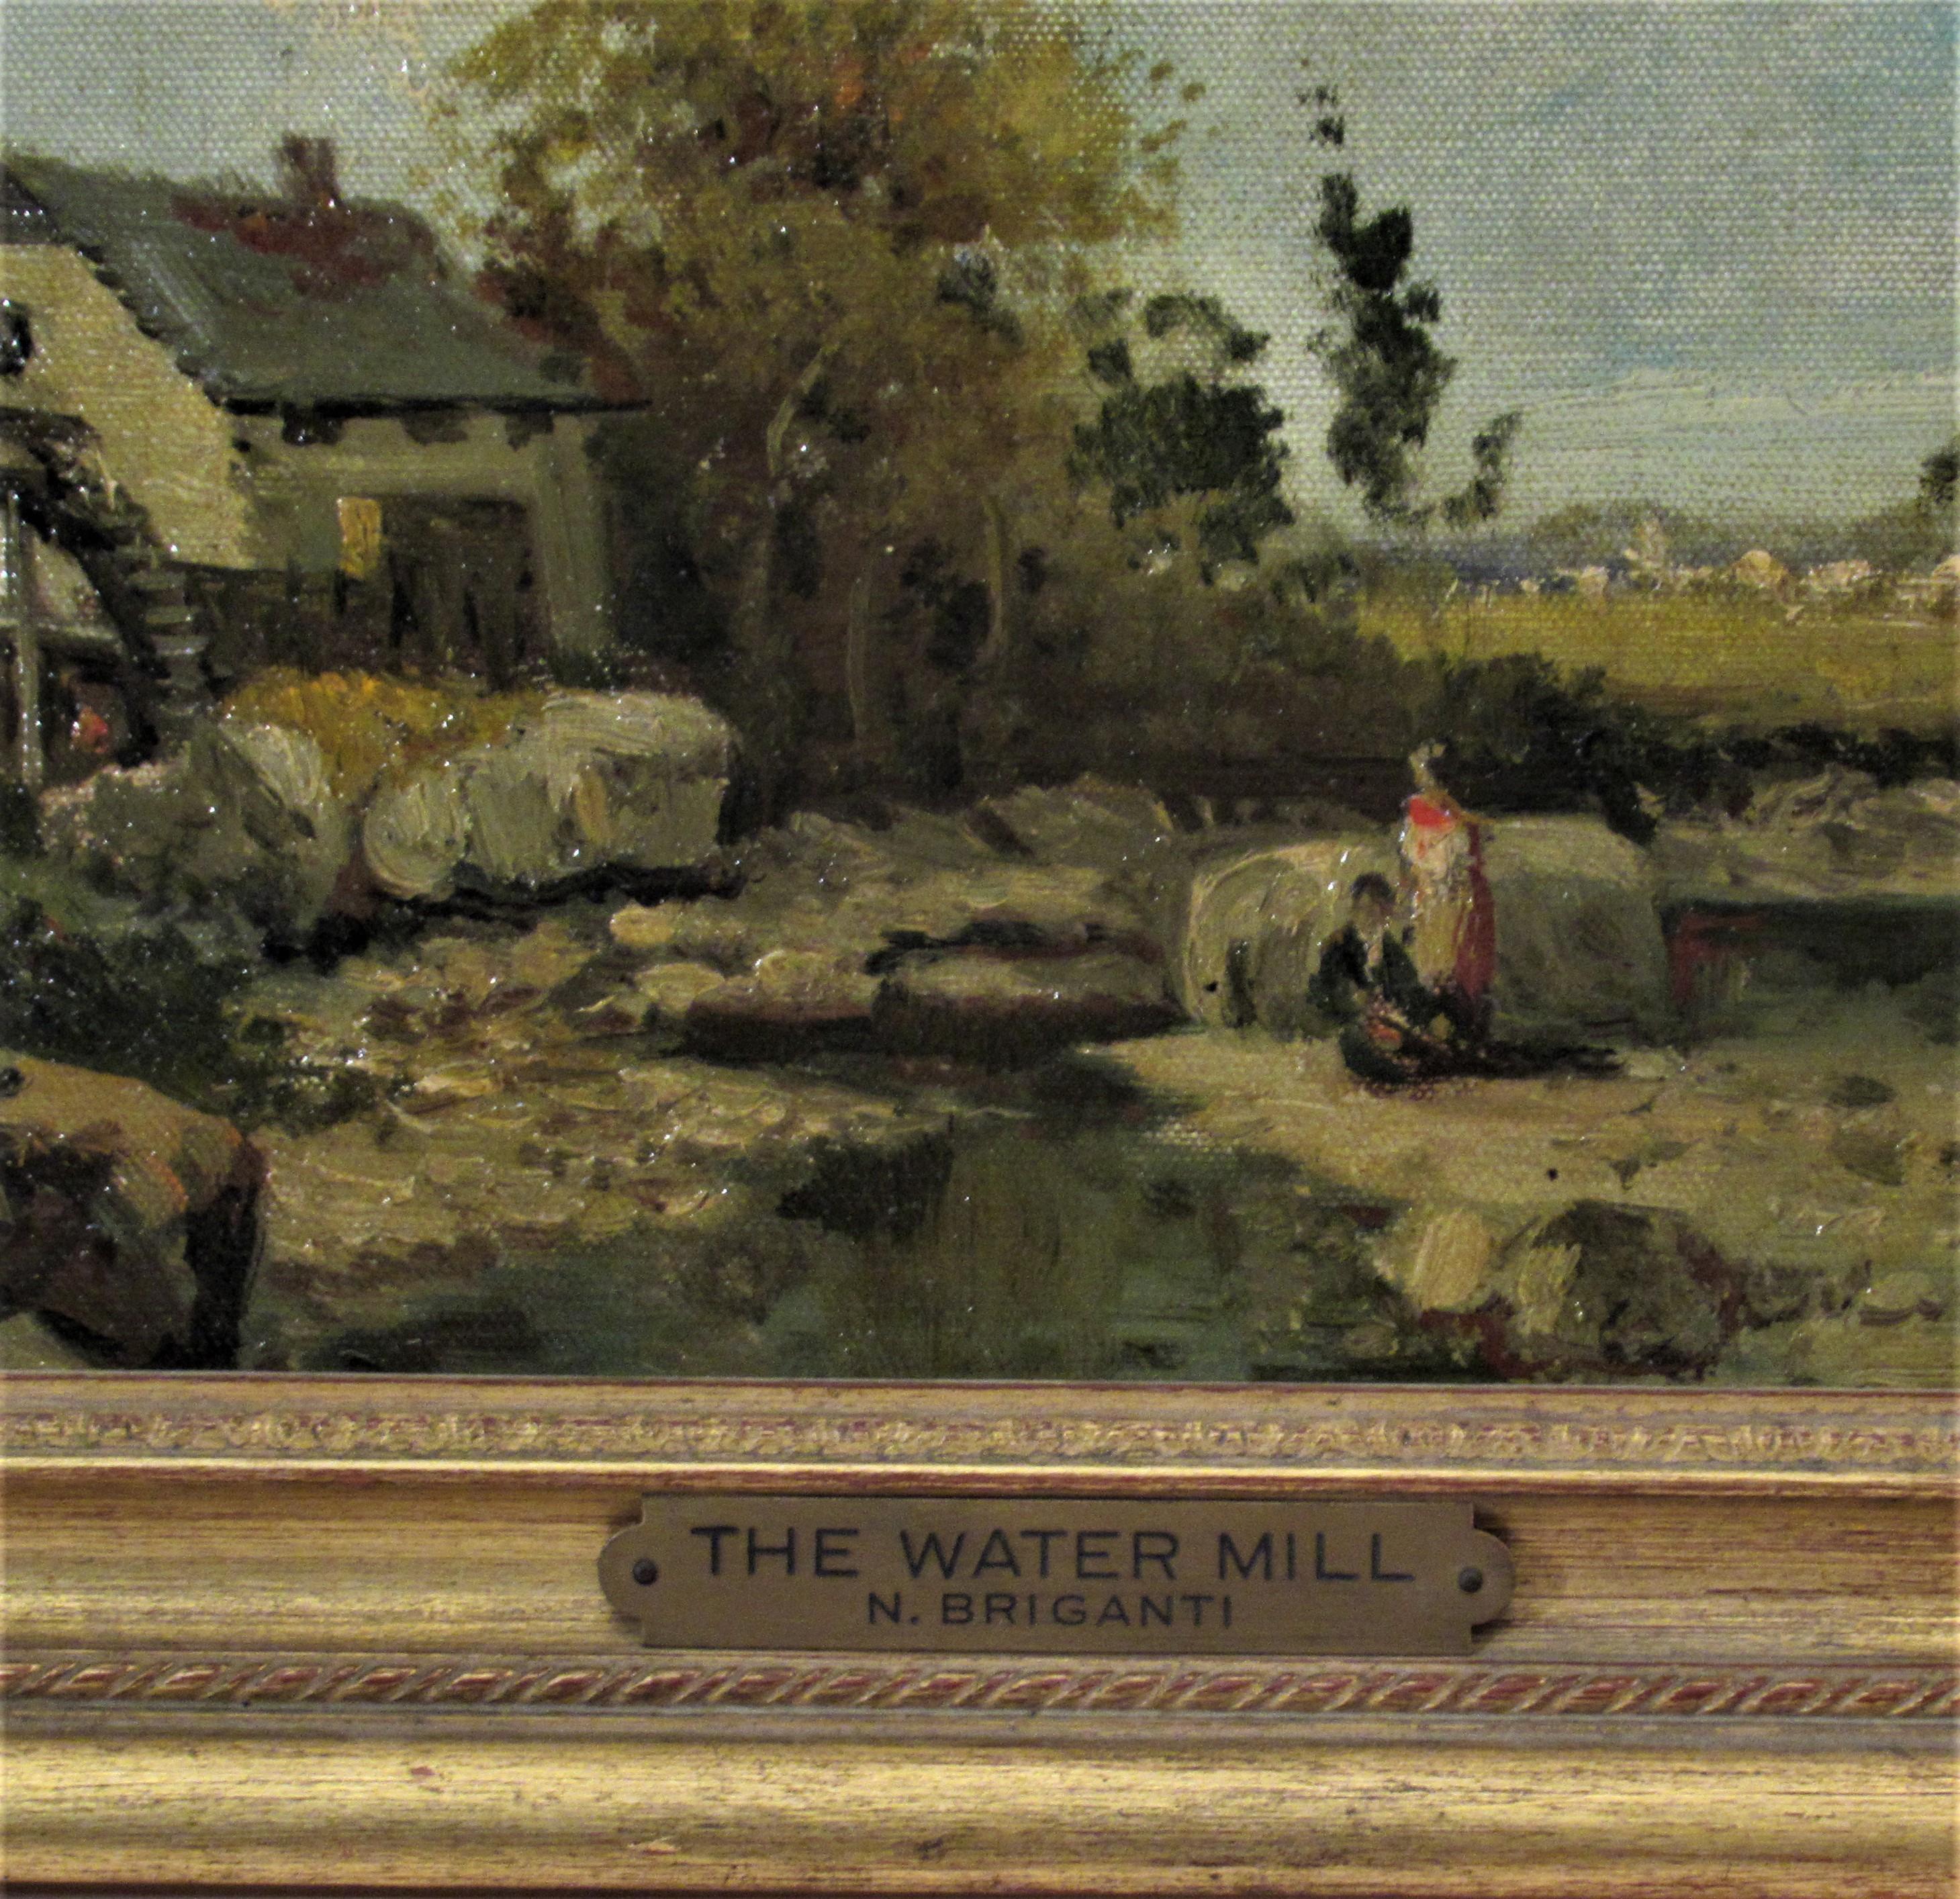 The Water Mill - American Impressionist Painting by Nicholas Briganti